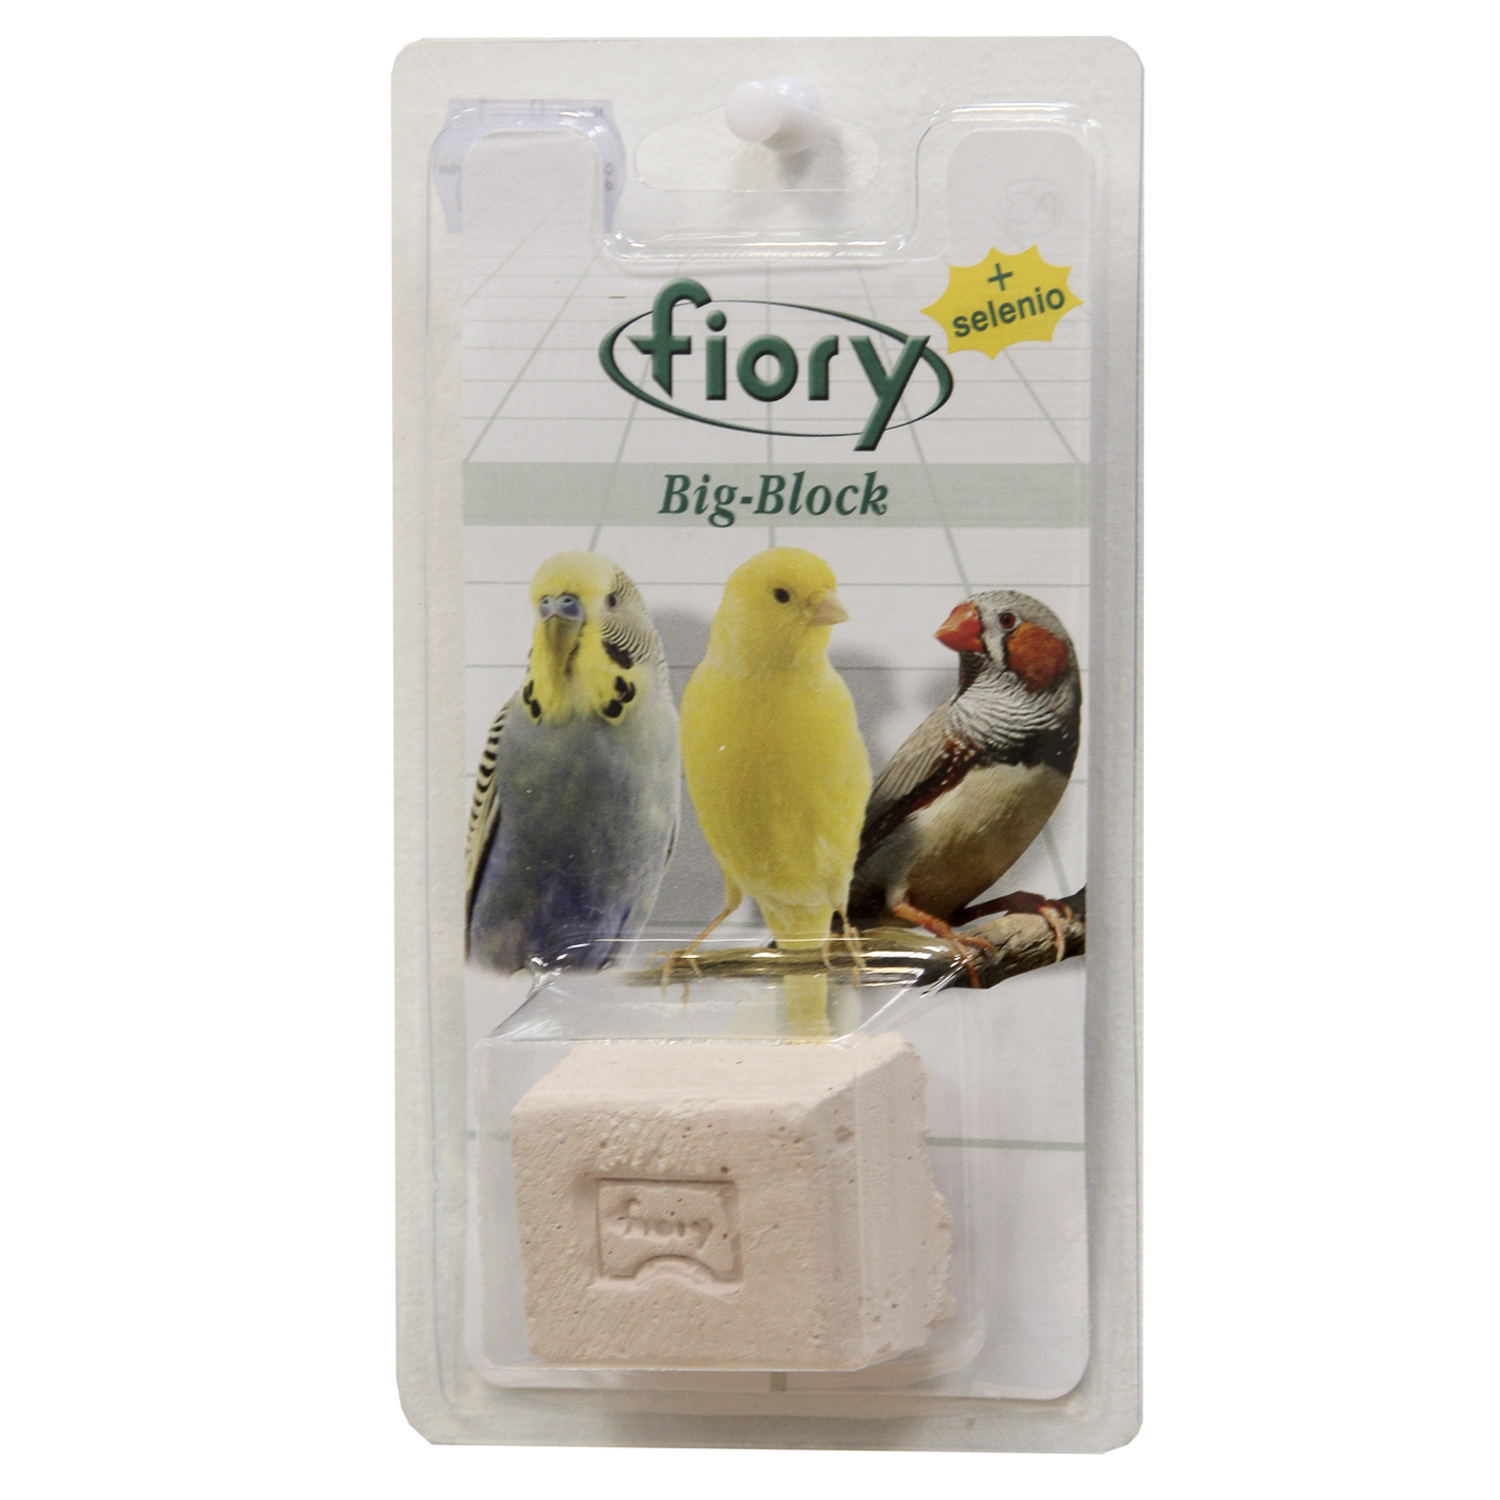 Fiory Fiory био-камень для птиц, с селеном (55 г) био камень для птиц fiory big block с селеном 55